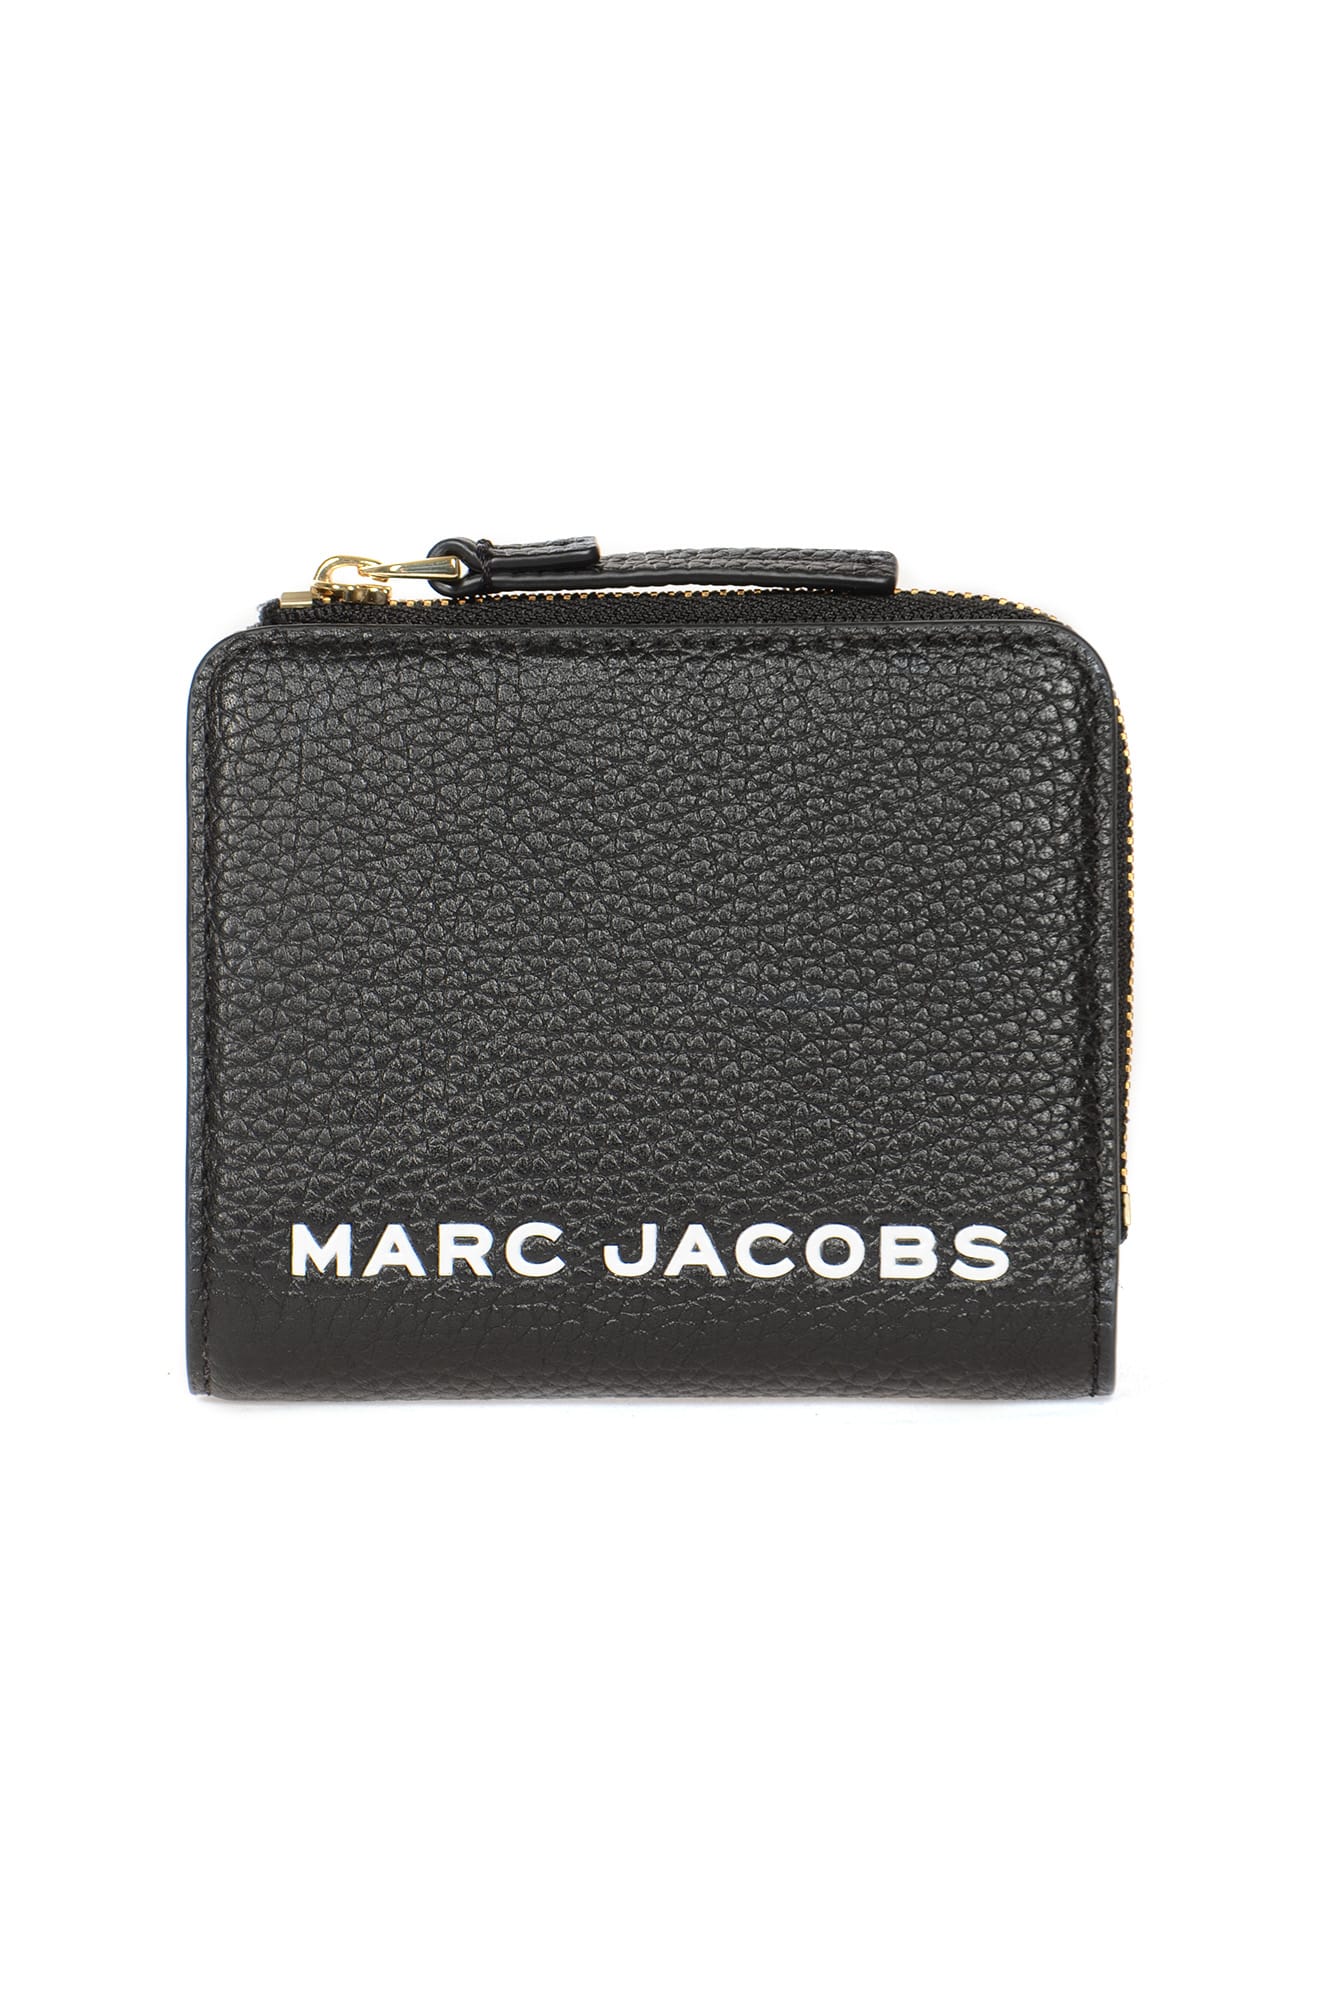 Marc Jacobs Button-snap Zip Pocket Wallet